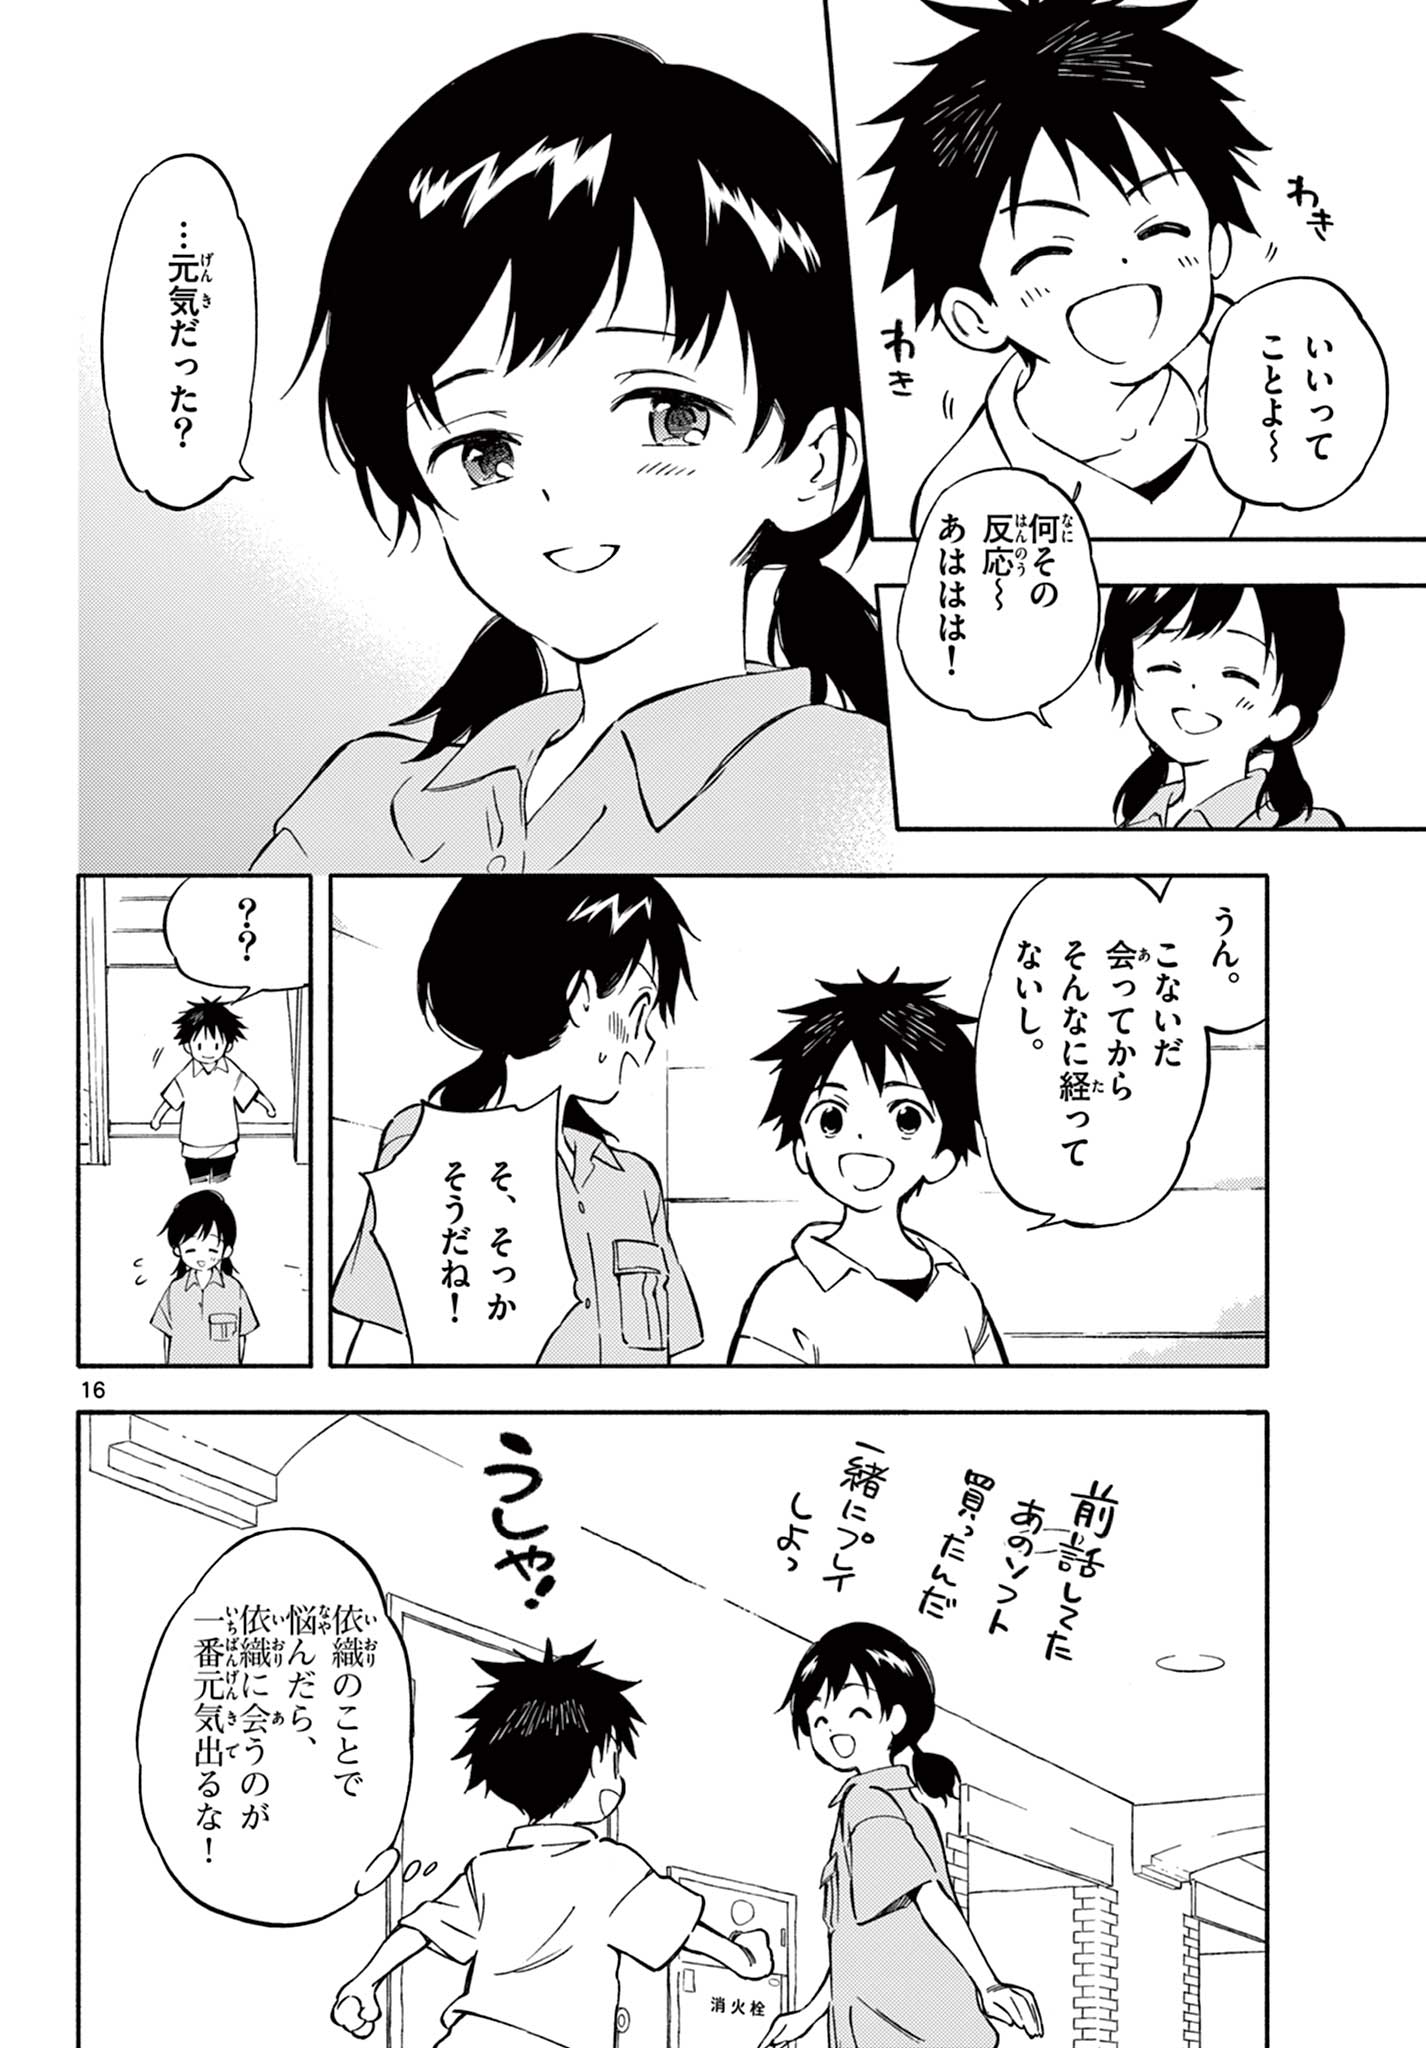 Nami no Shijima no Horizont - Chapter 12.2 - Page 2